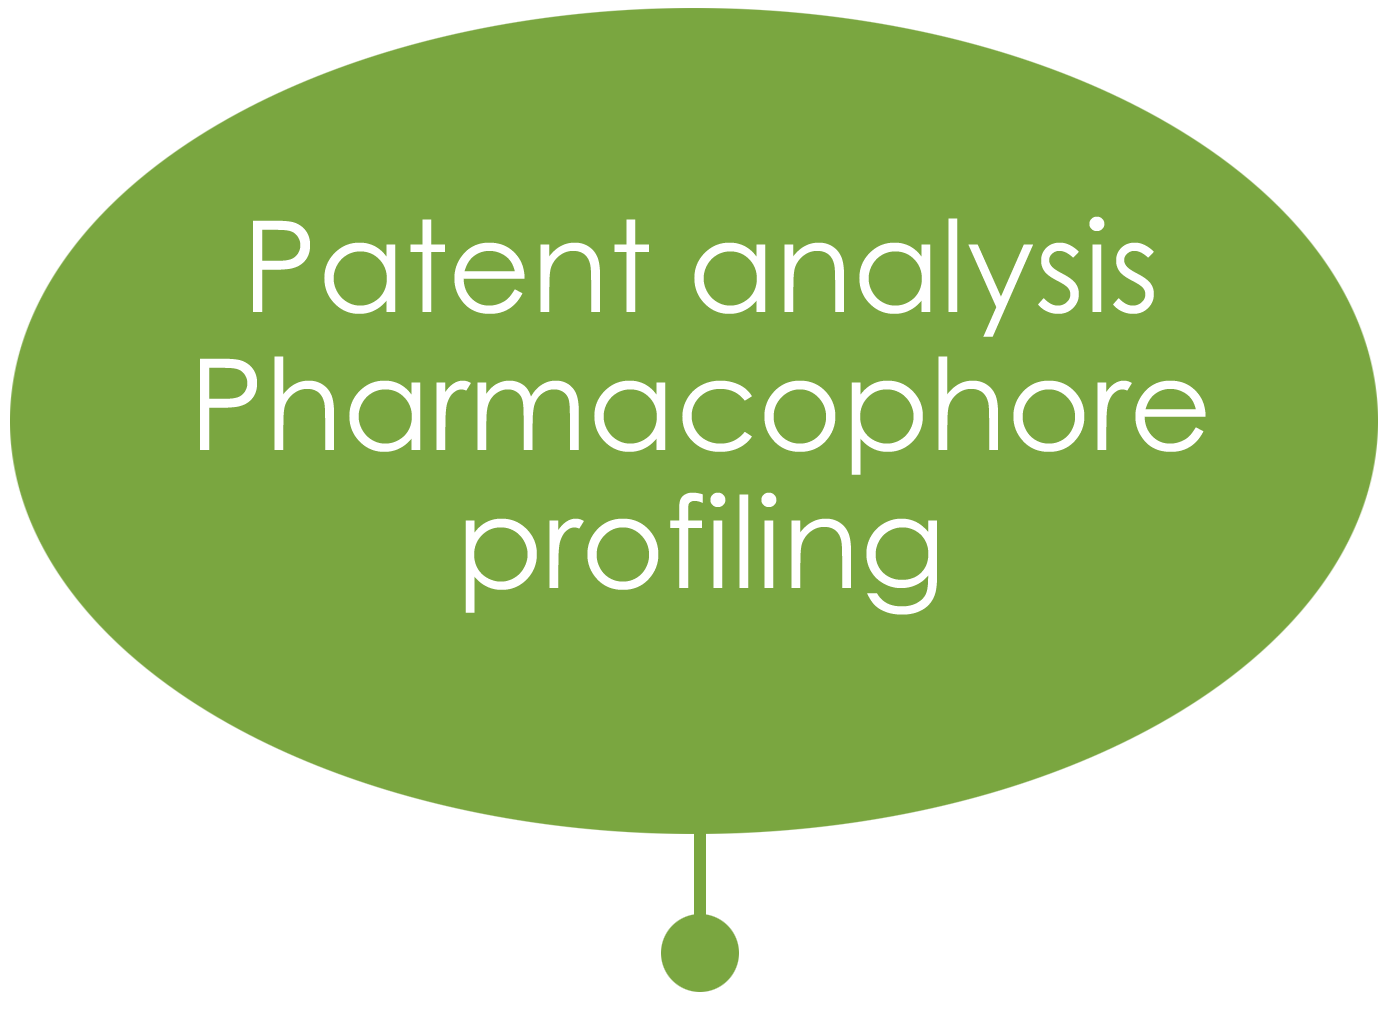 Pharmacophore profiling